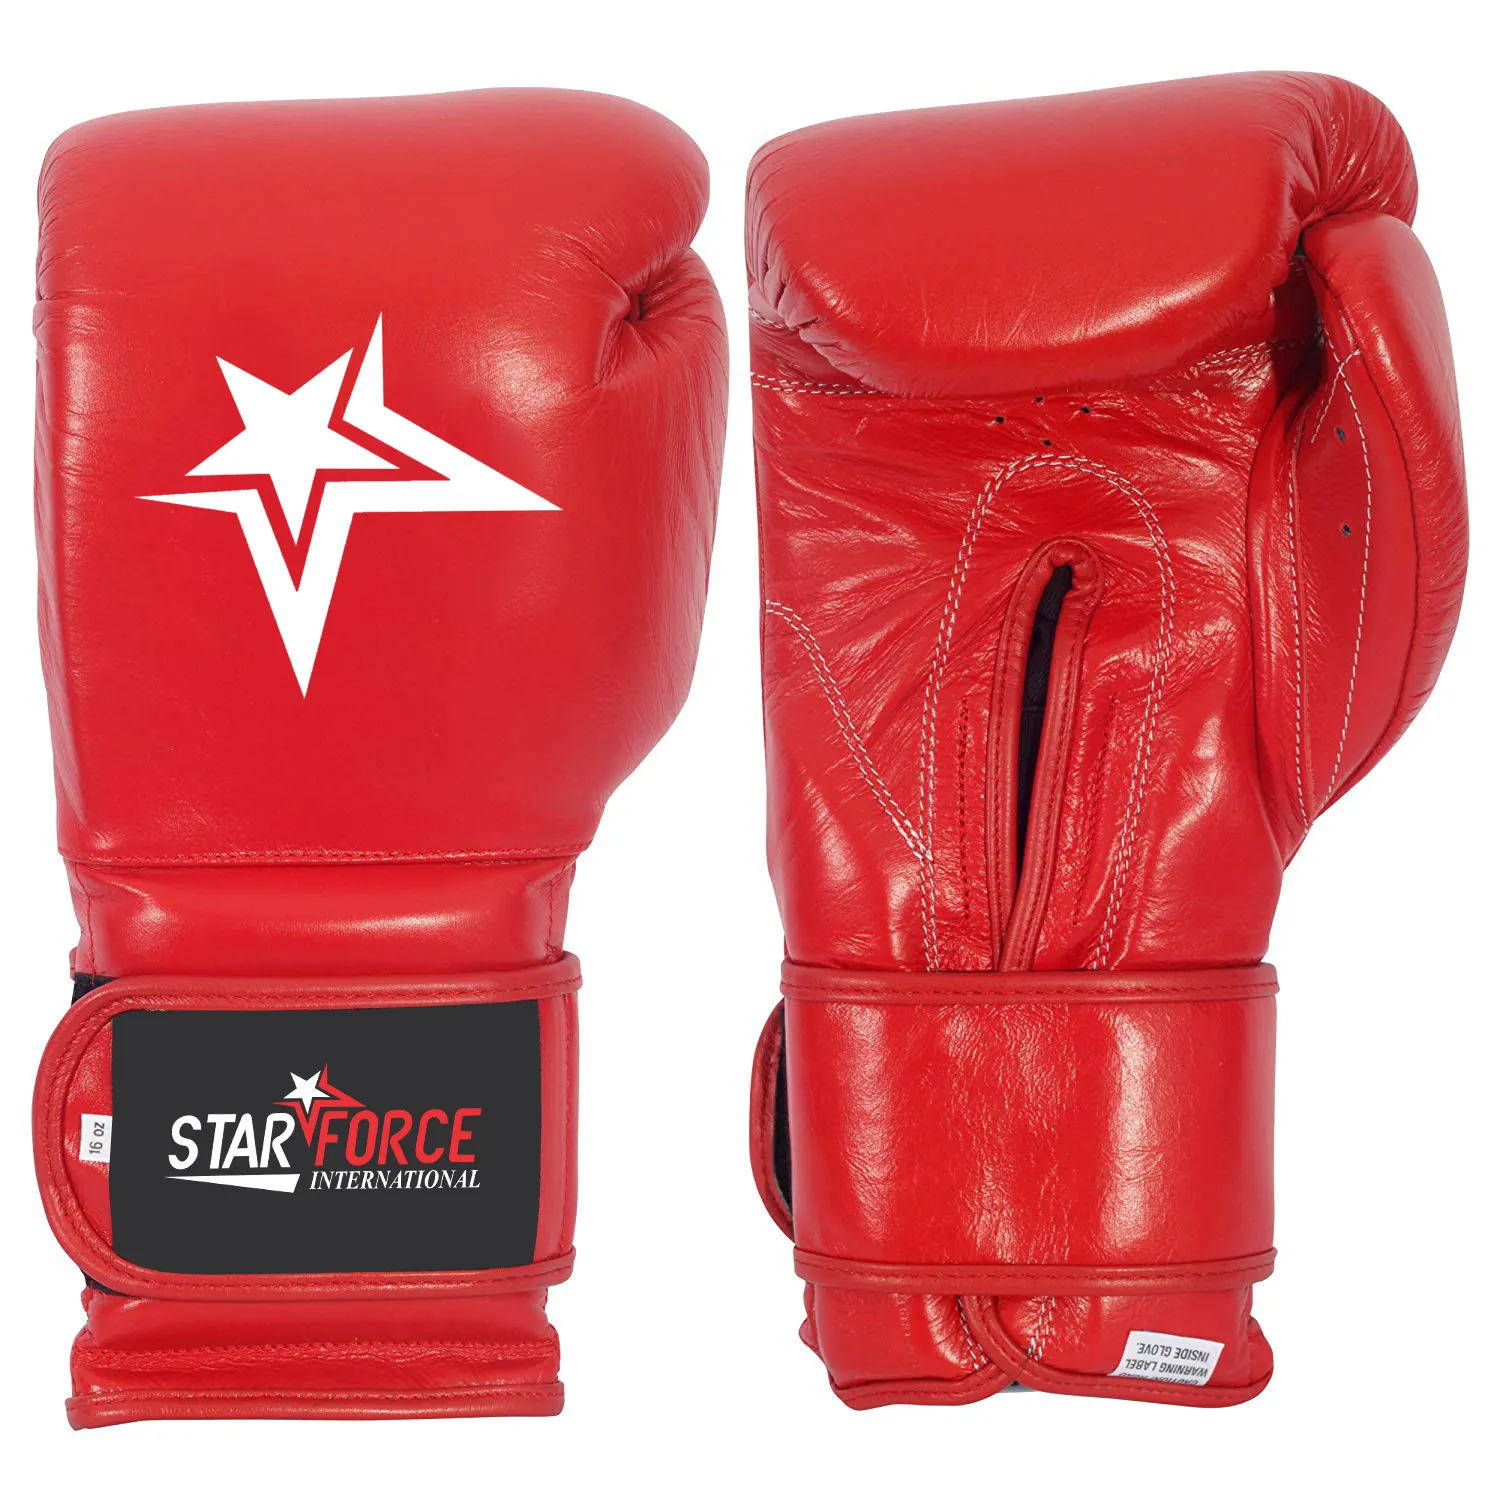 Wholesale Durable Boxing Training Gloves for Men Women Kids Ideal for Kickboxing MMA Muay Thai